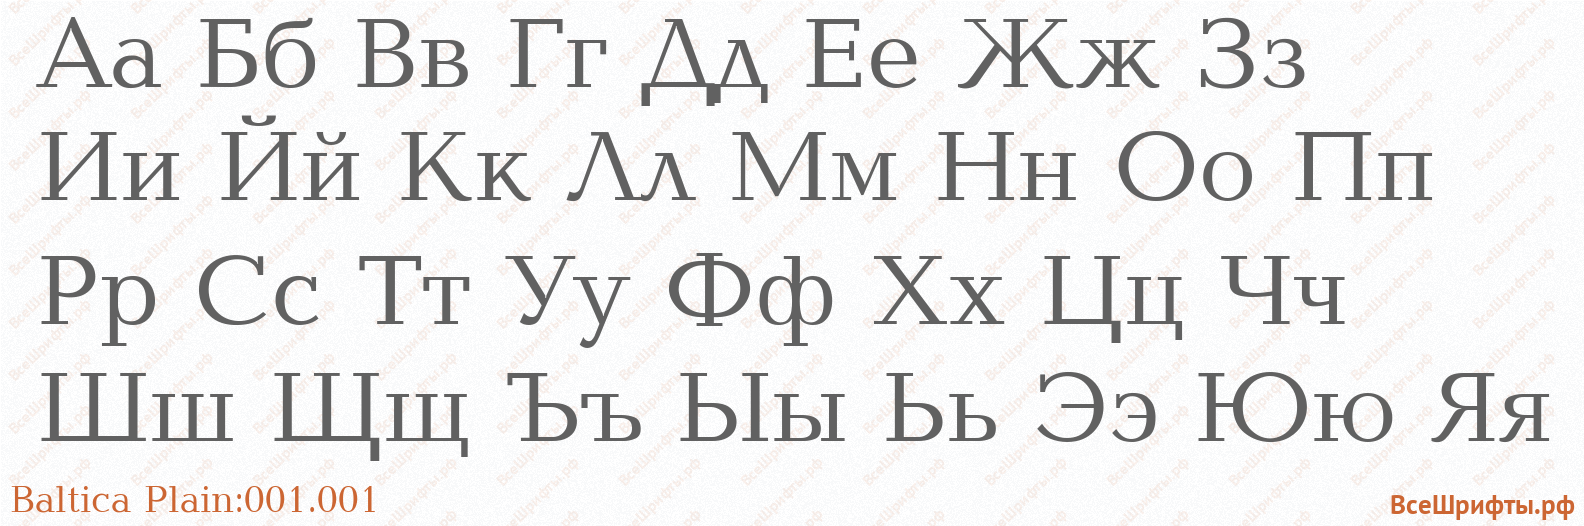 Шрифт Baltica Plain:001.001 с русскими буквами